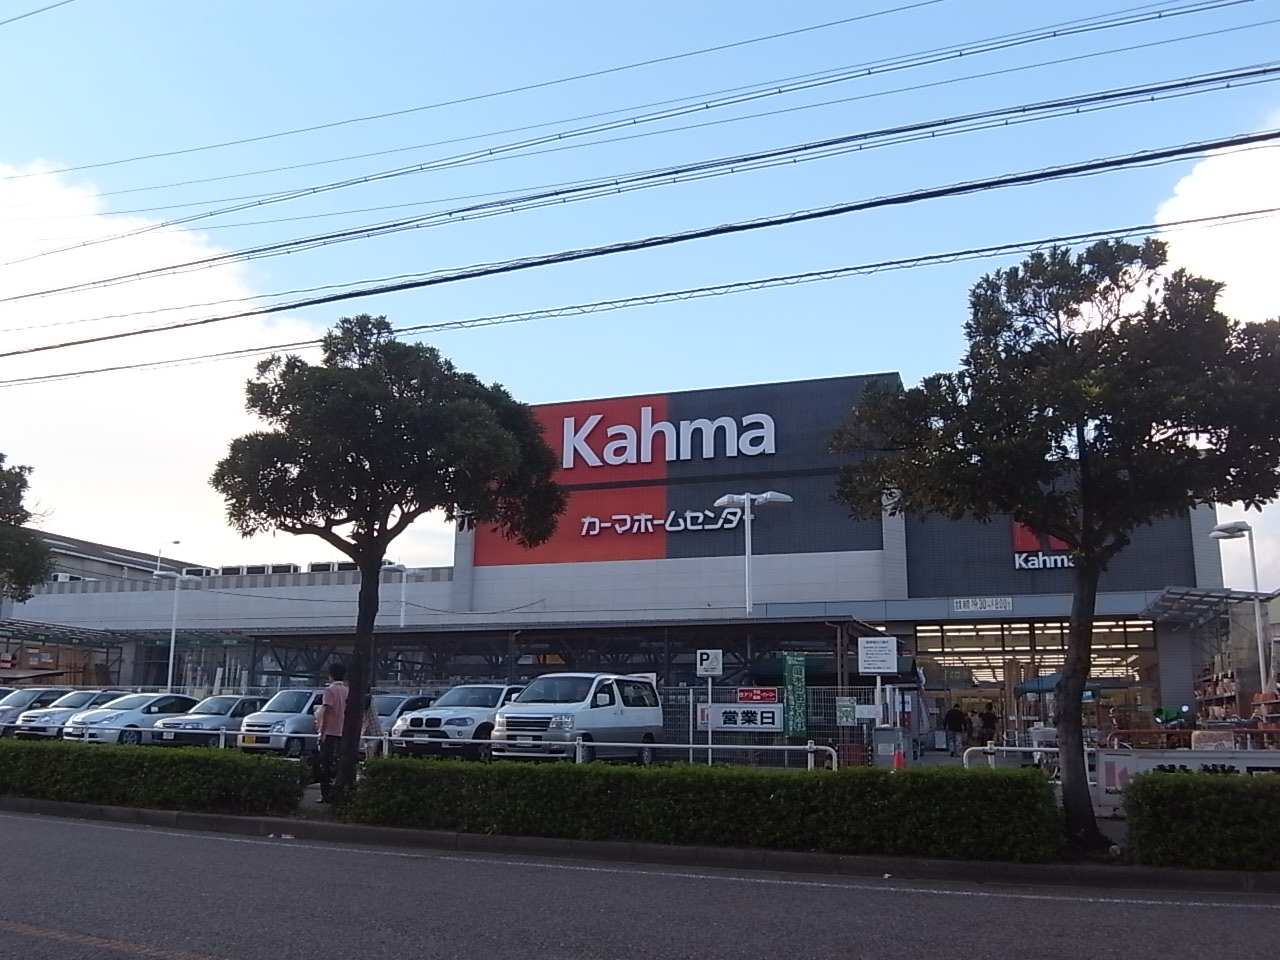 Home center. 2200m to Kama home improvement Nagoya Minato shop (home improvement)